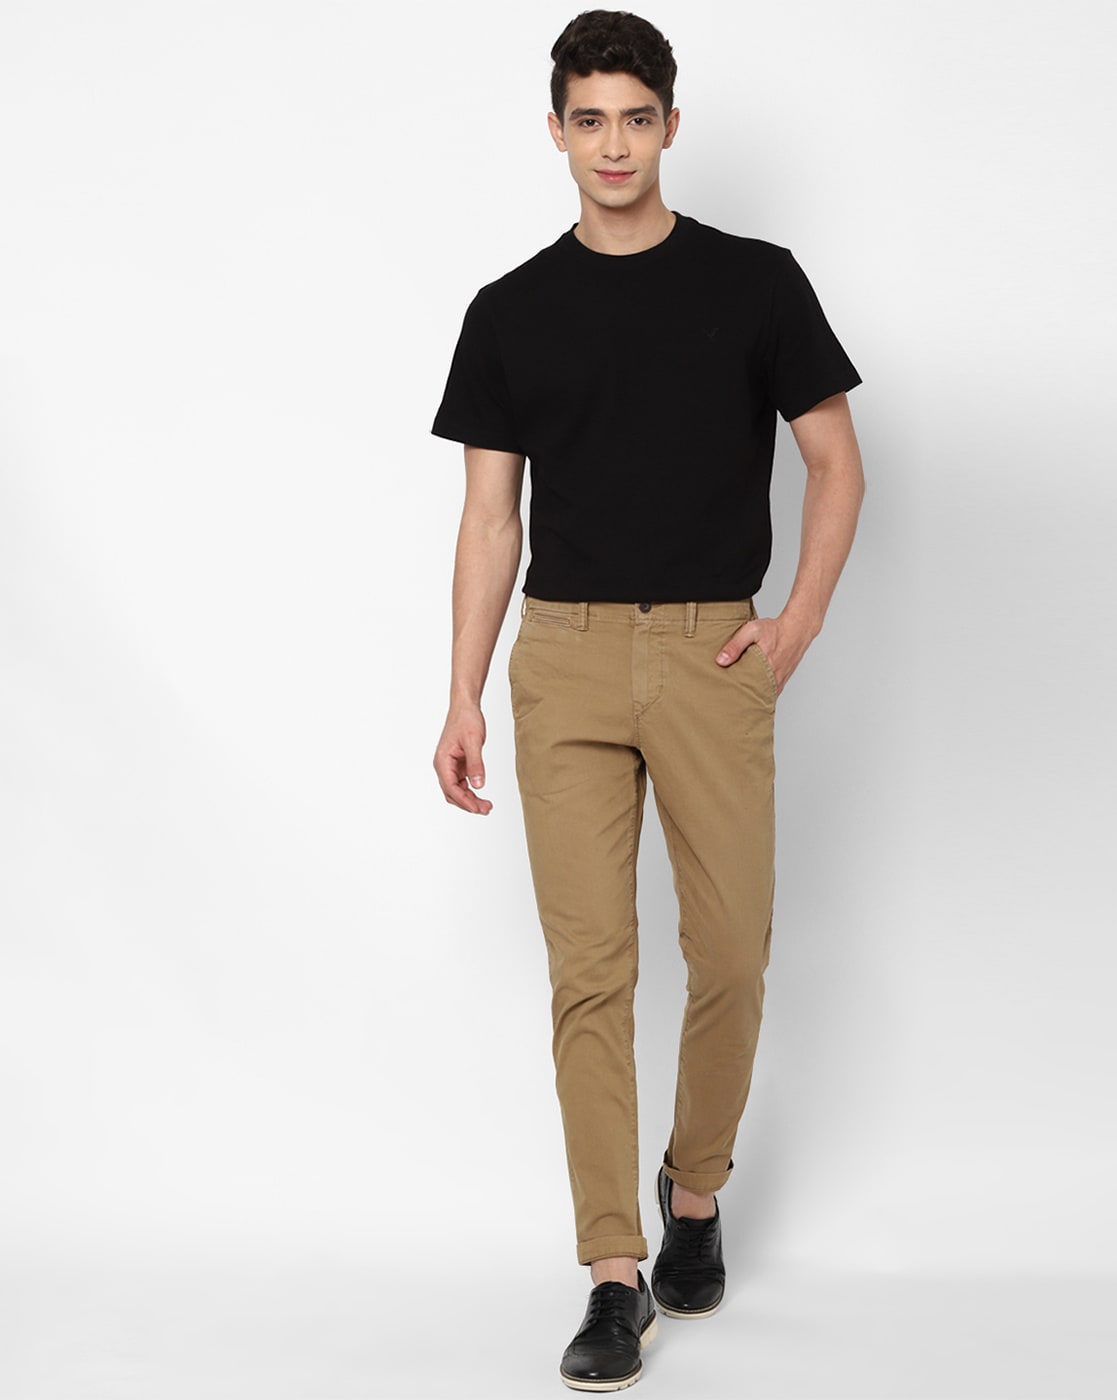 What pants matches a black shirt? - Quora